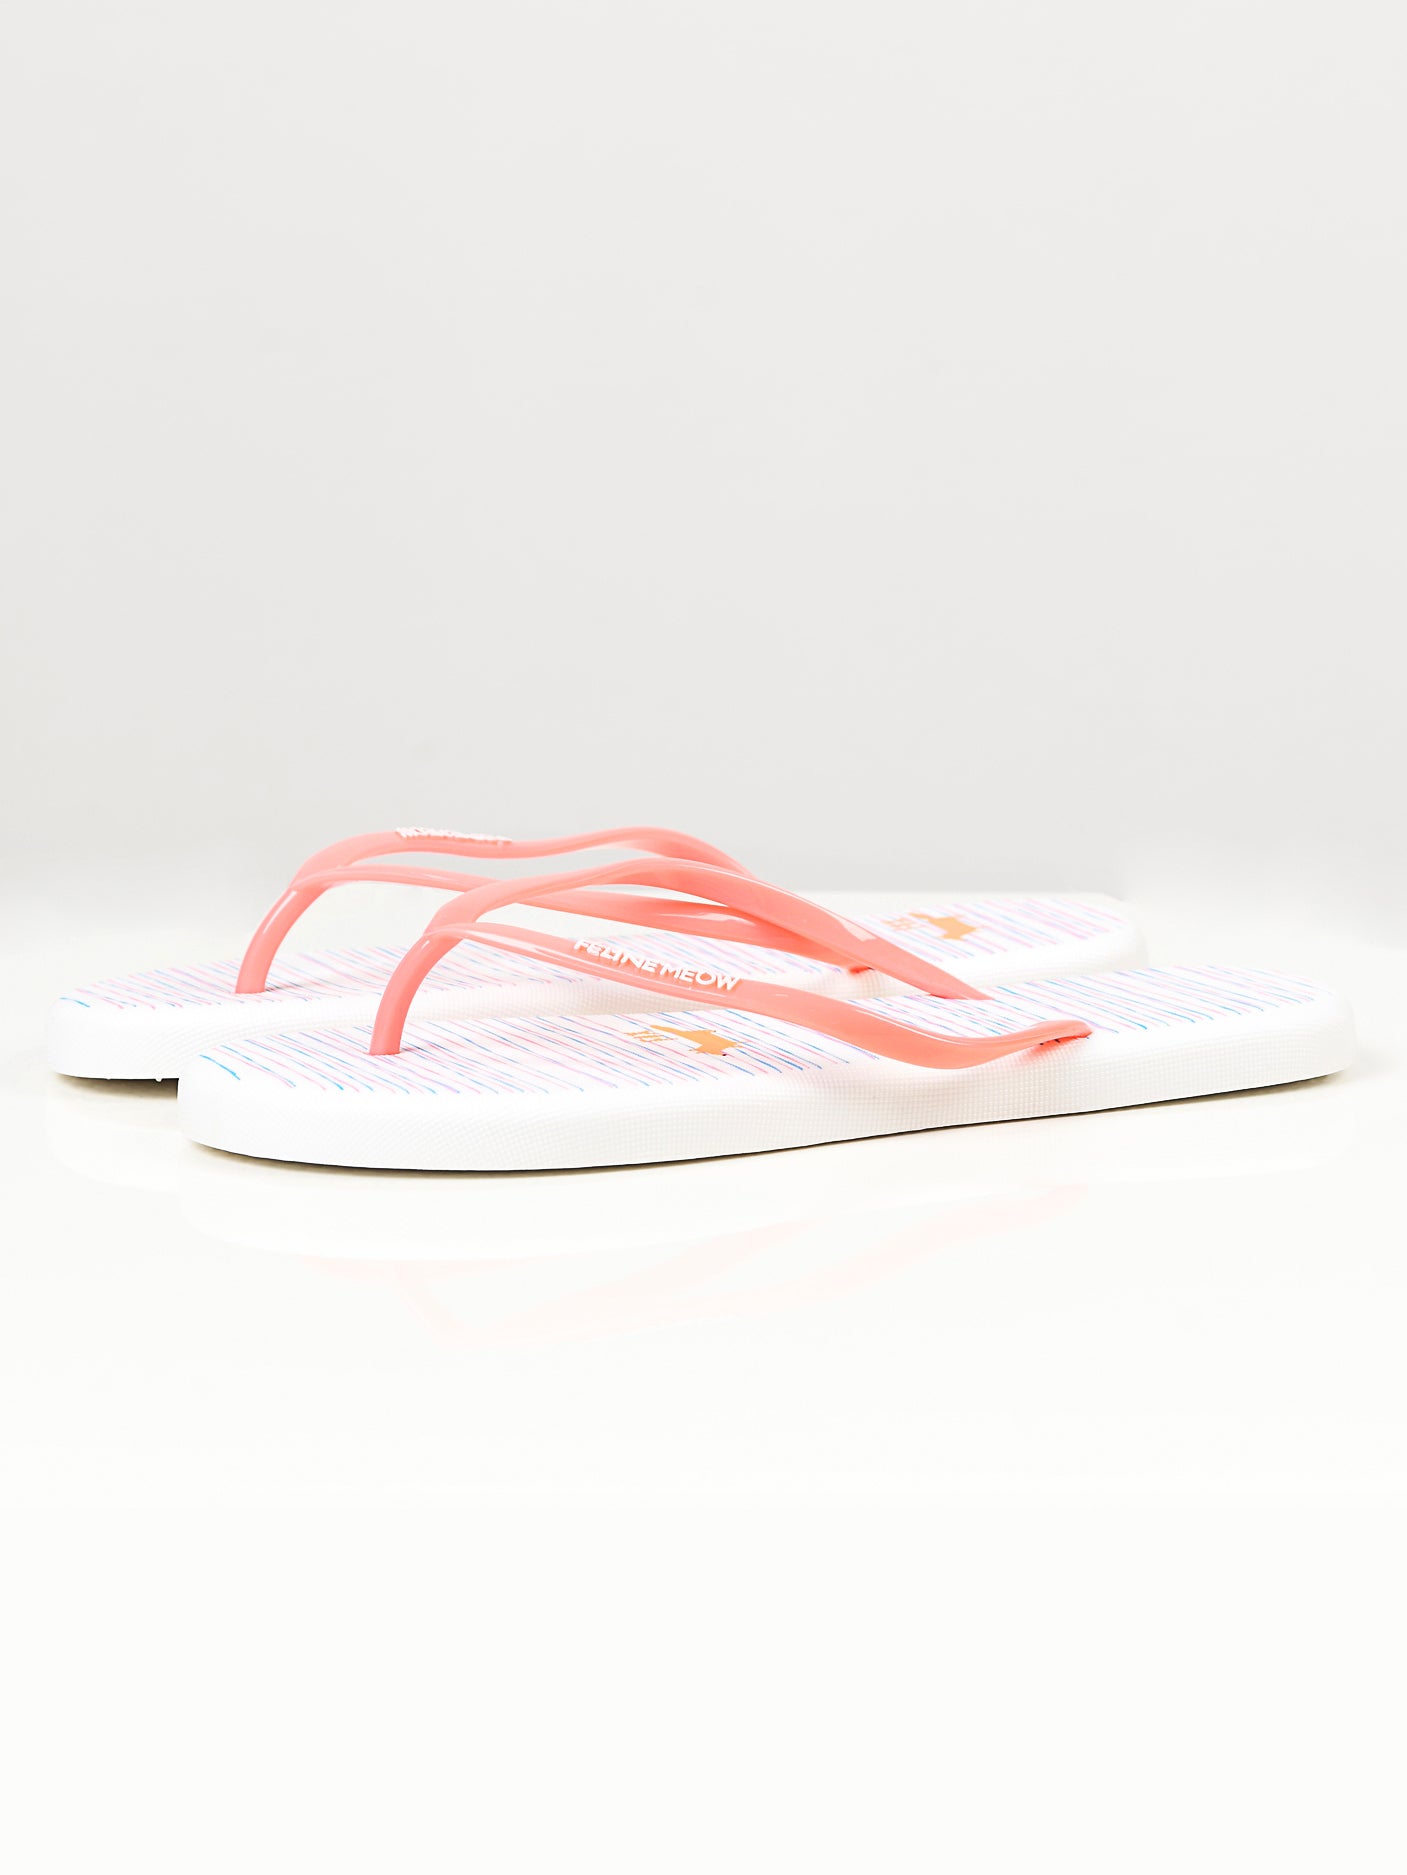 Printed Flip Flops -  White and Peach